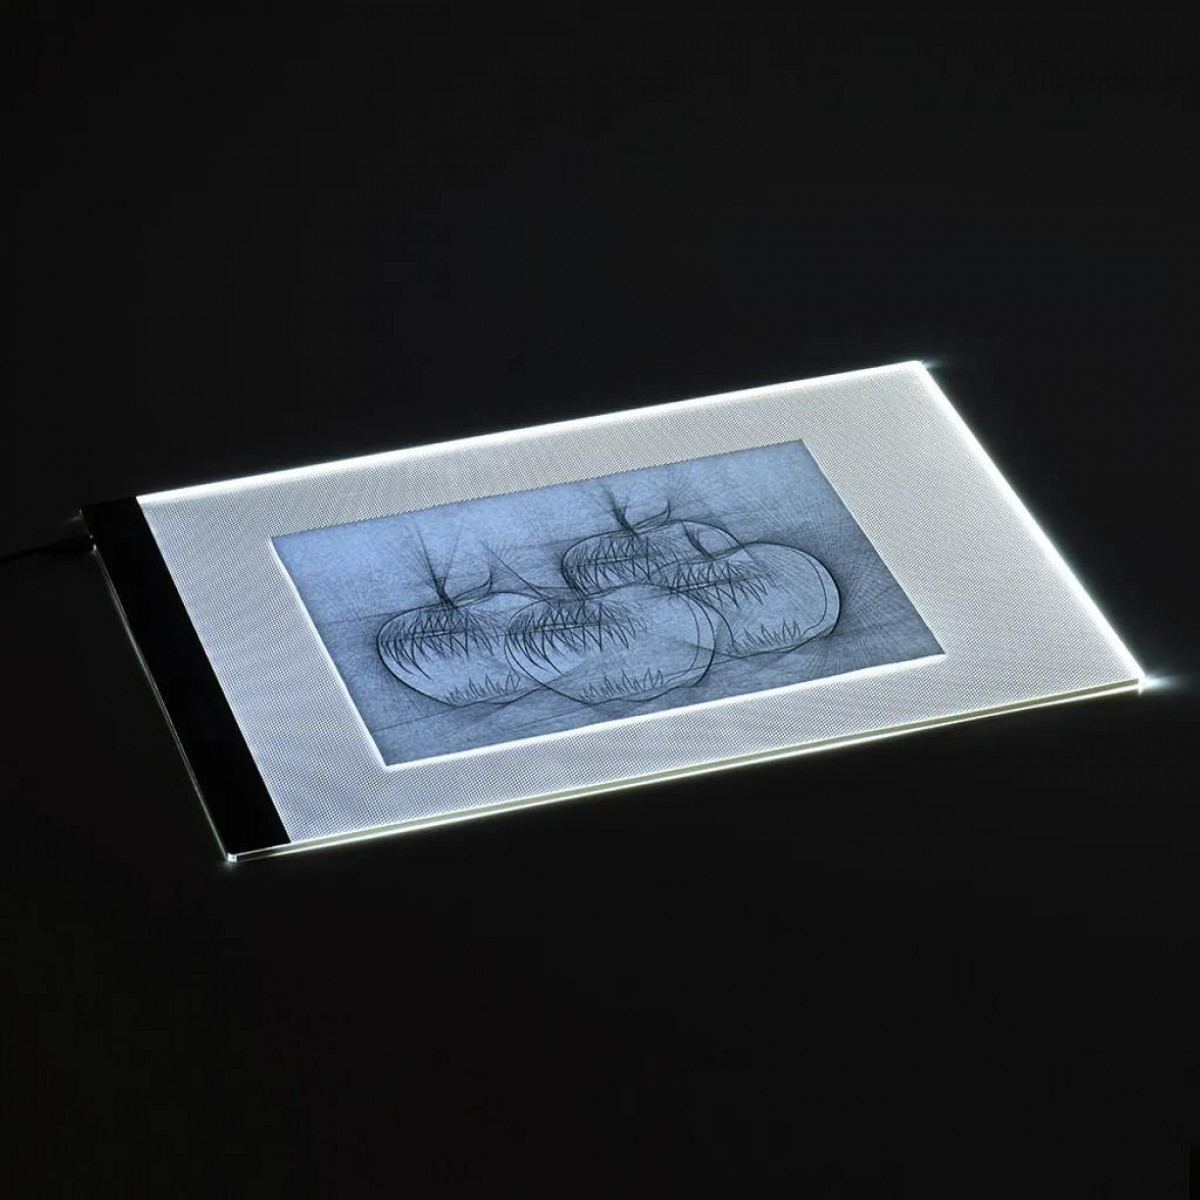 INF LED Zeichenbrett Leuchttisch mit USB A4 Grafiktablett